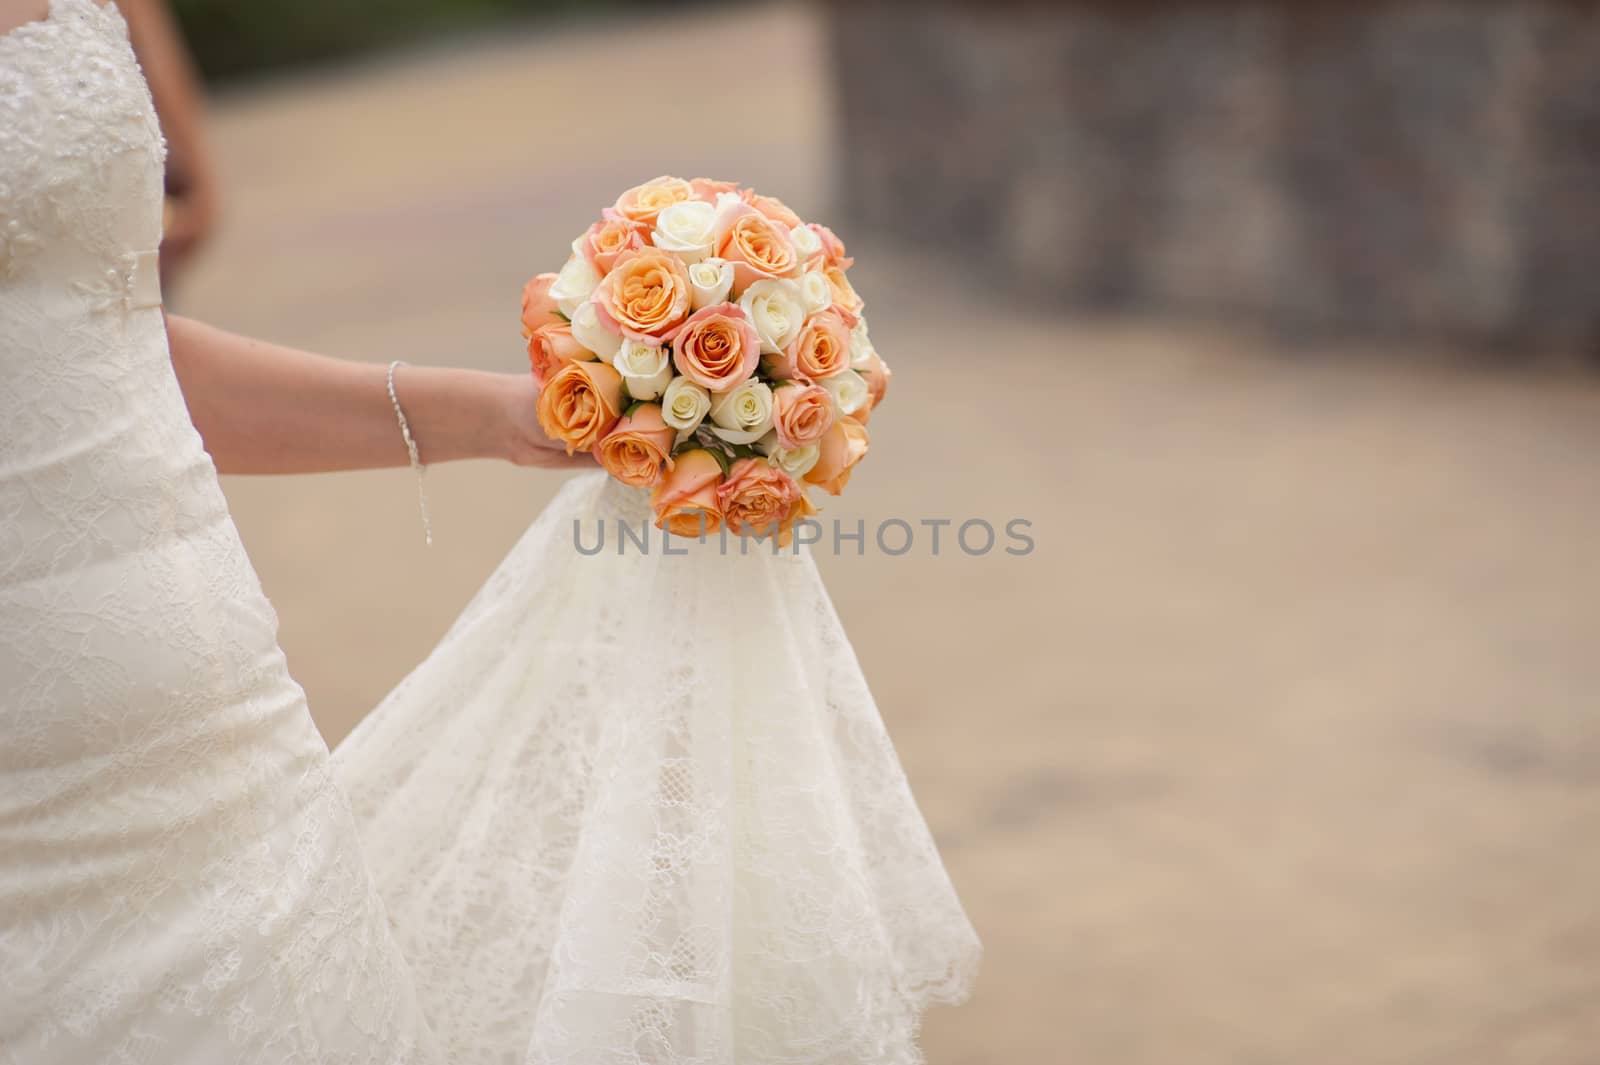 wedding bouquet at bride's hands 